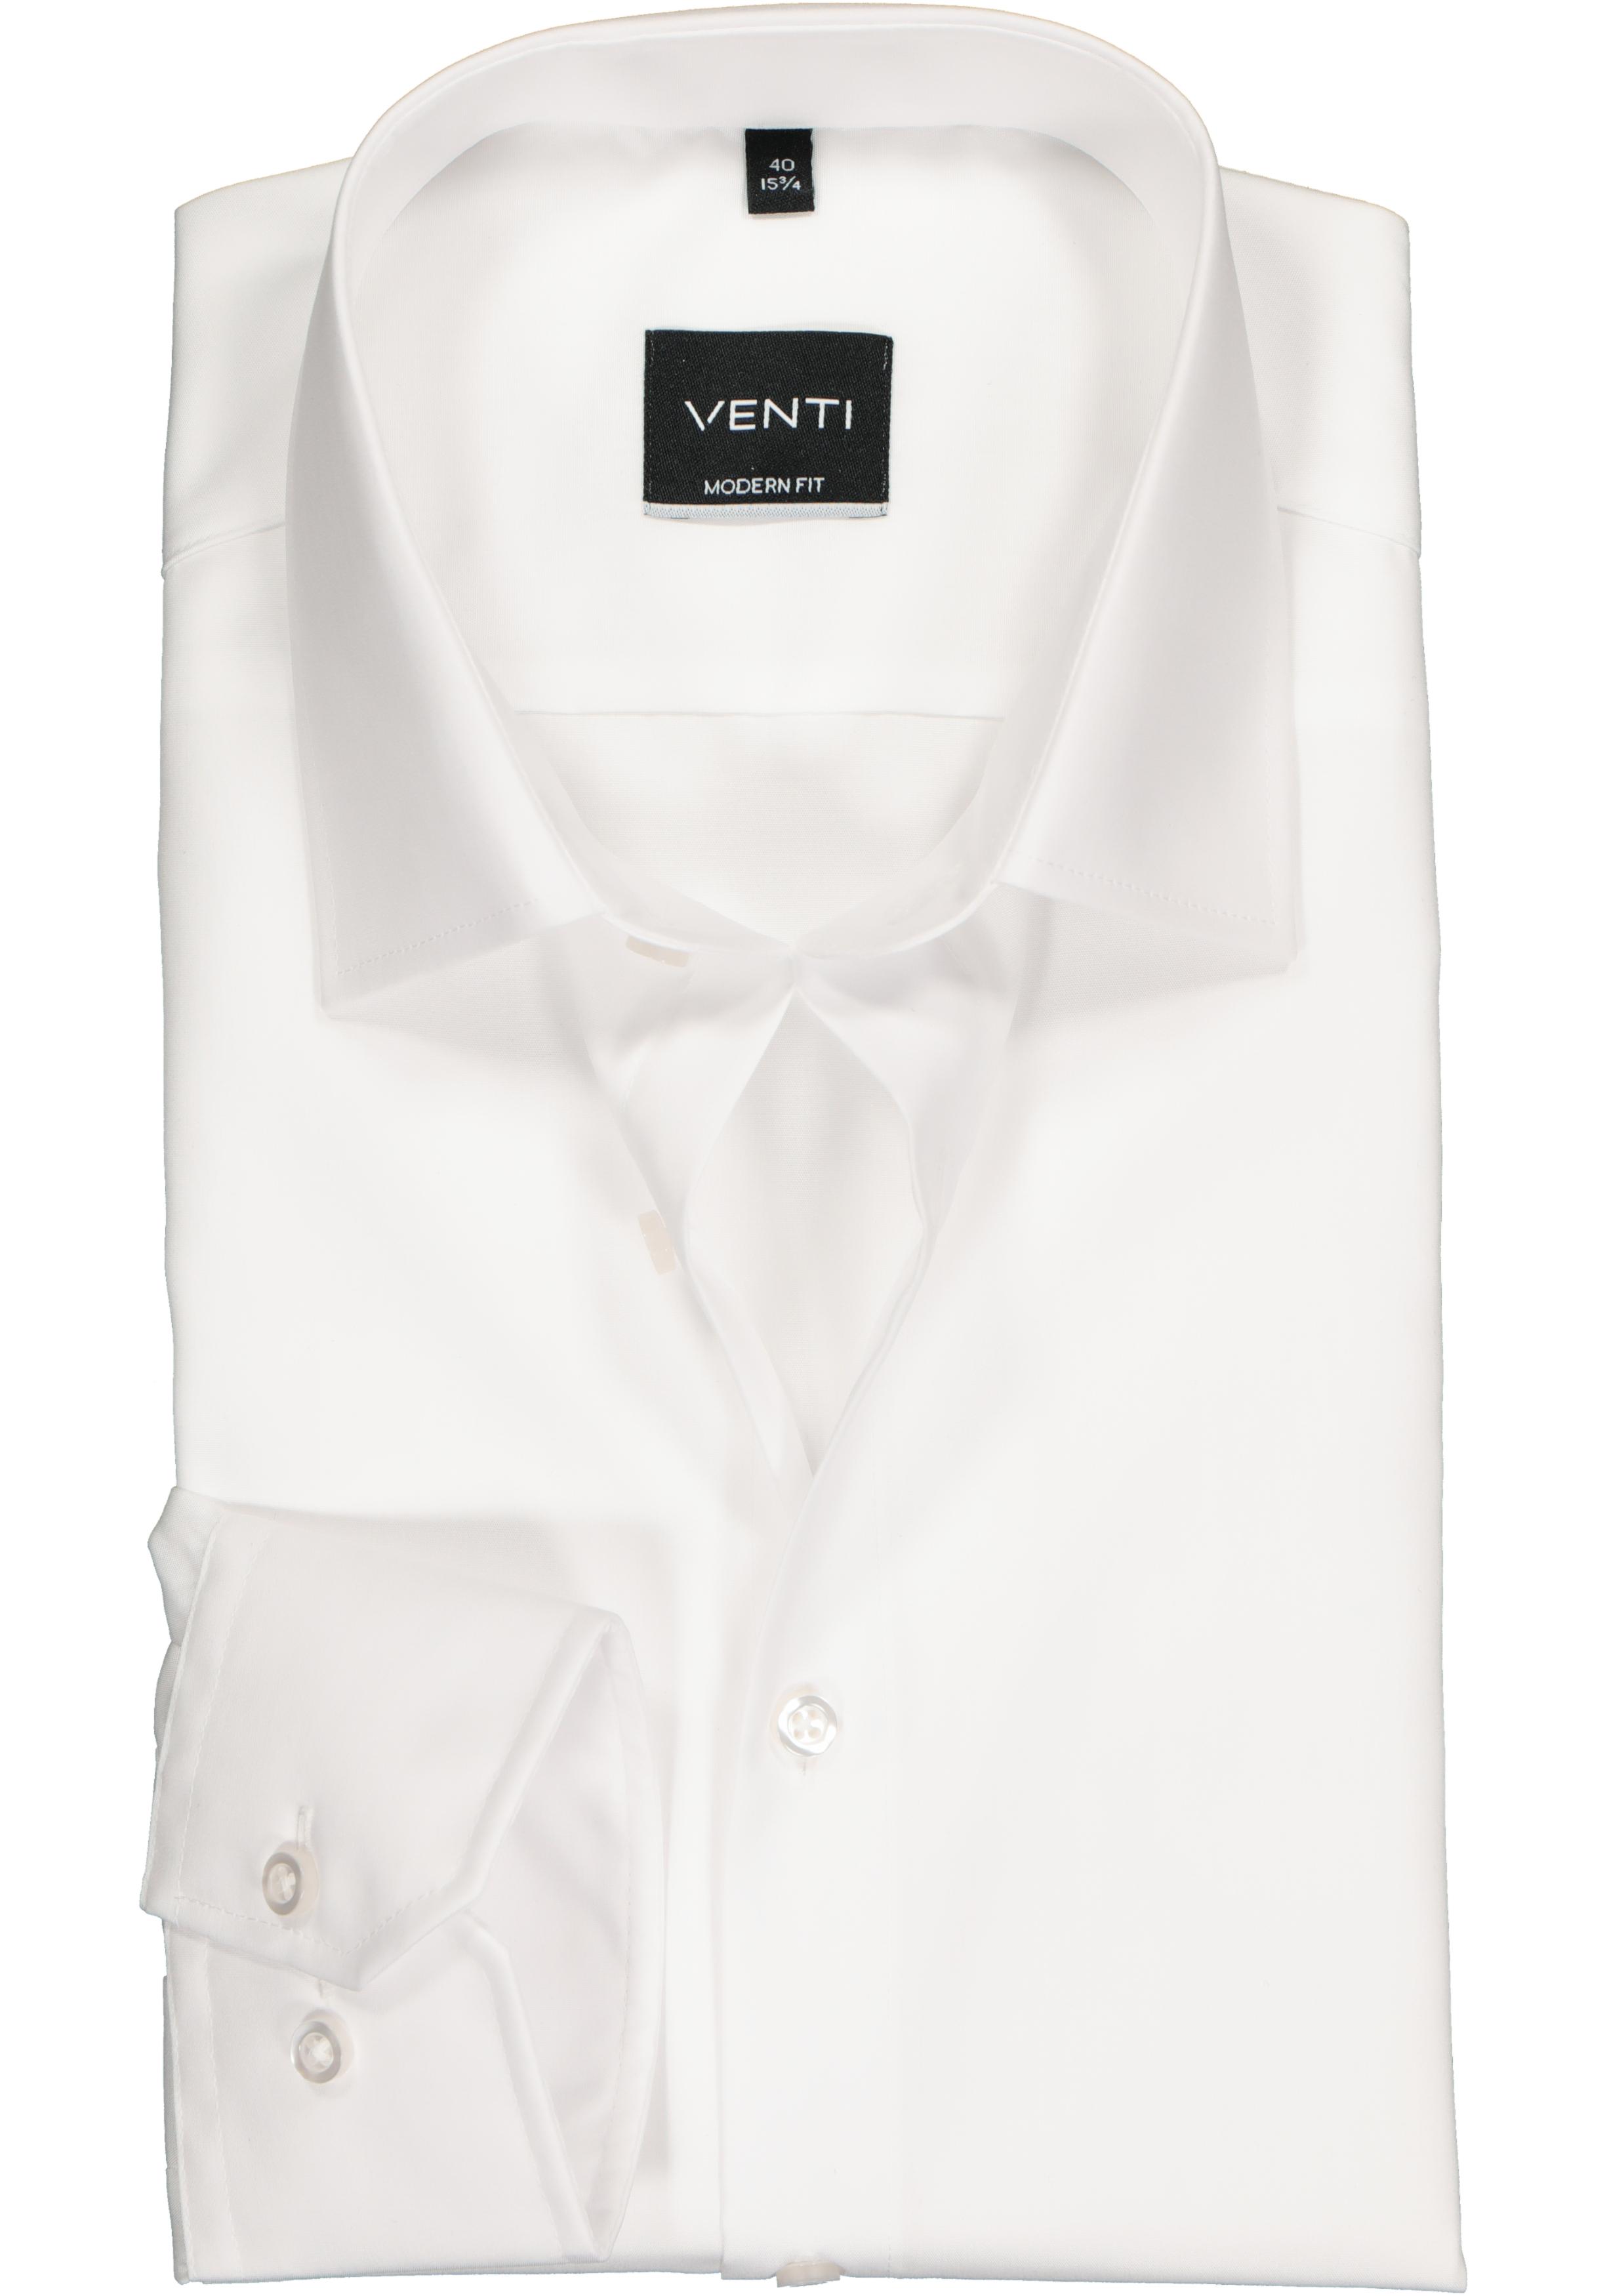 Venti Modern Fit overhemd, mouwlengte wit - Gratis bezorgd